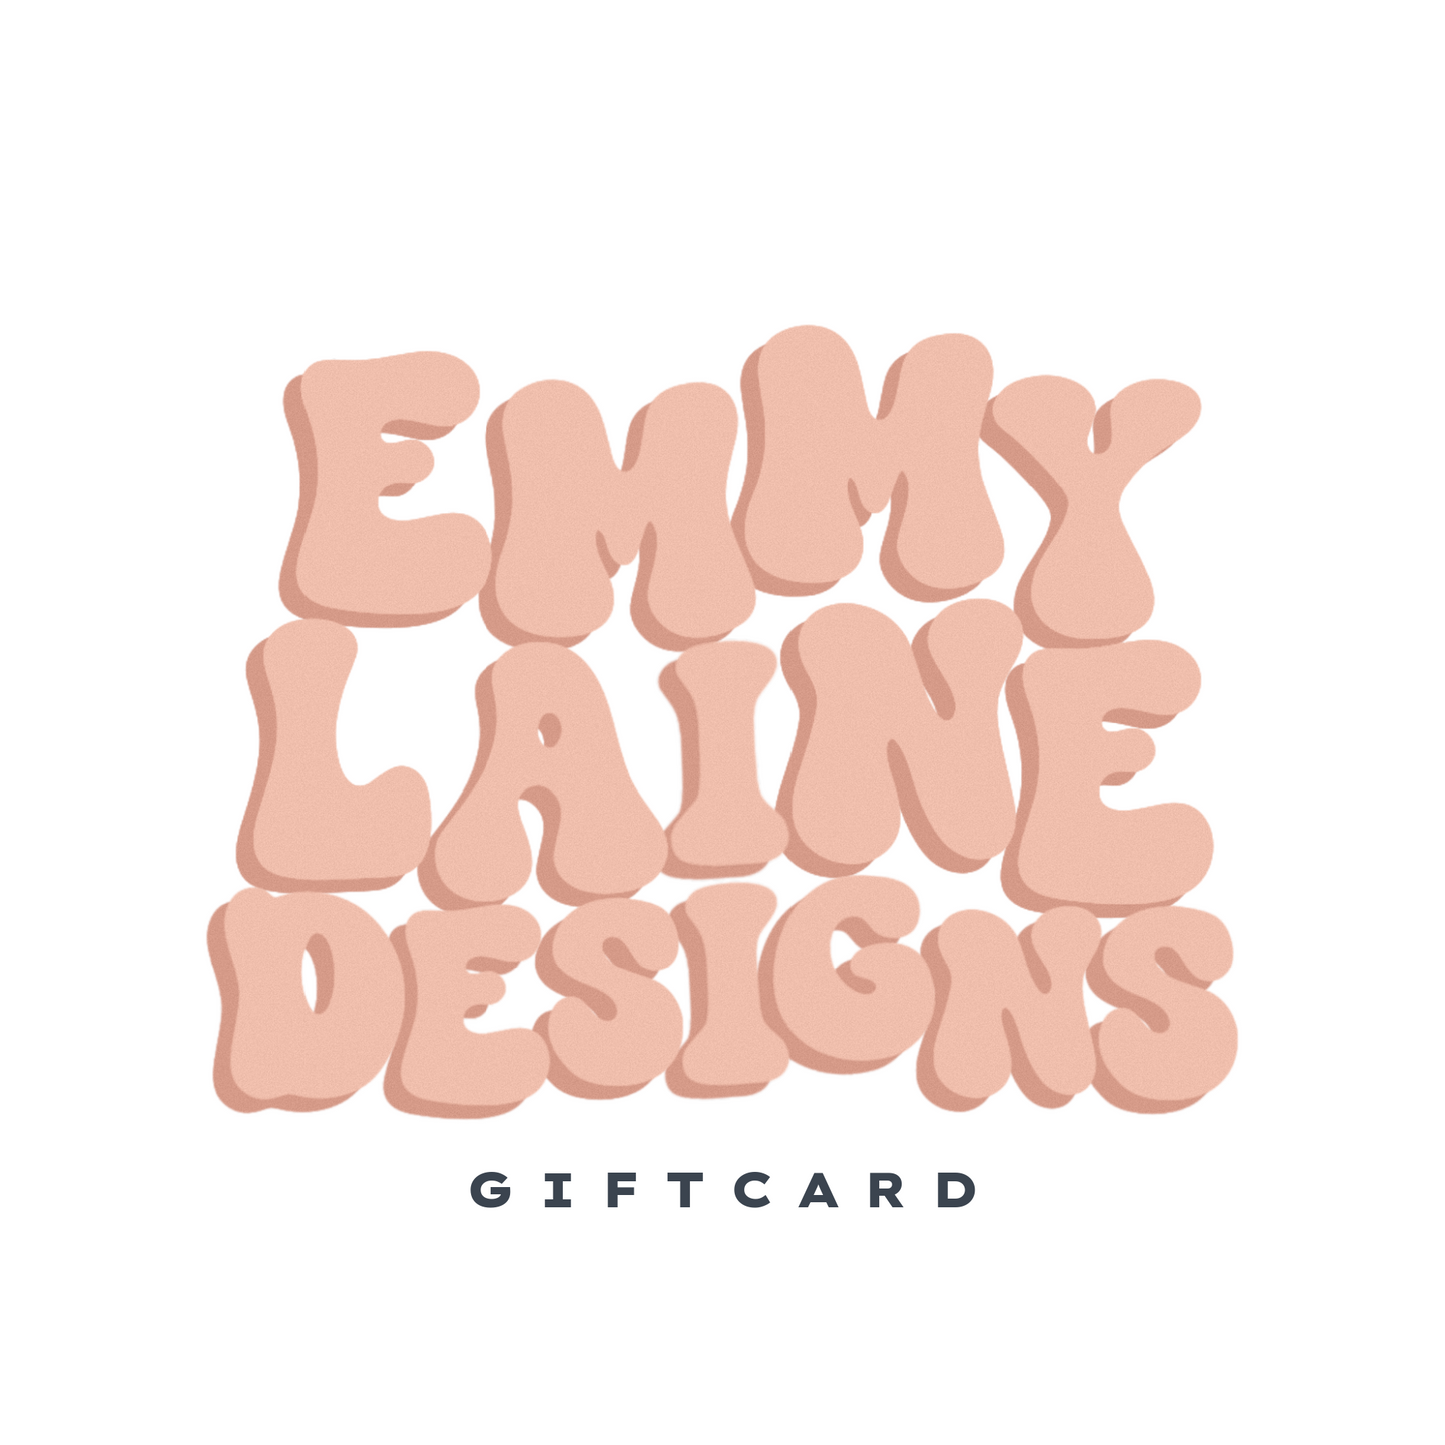 Emmy Laine Designs Gift Card